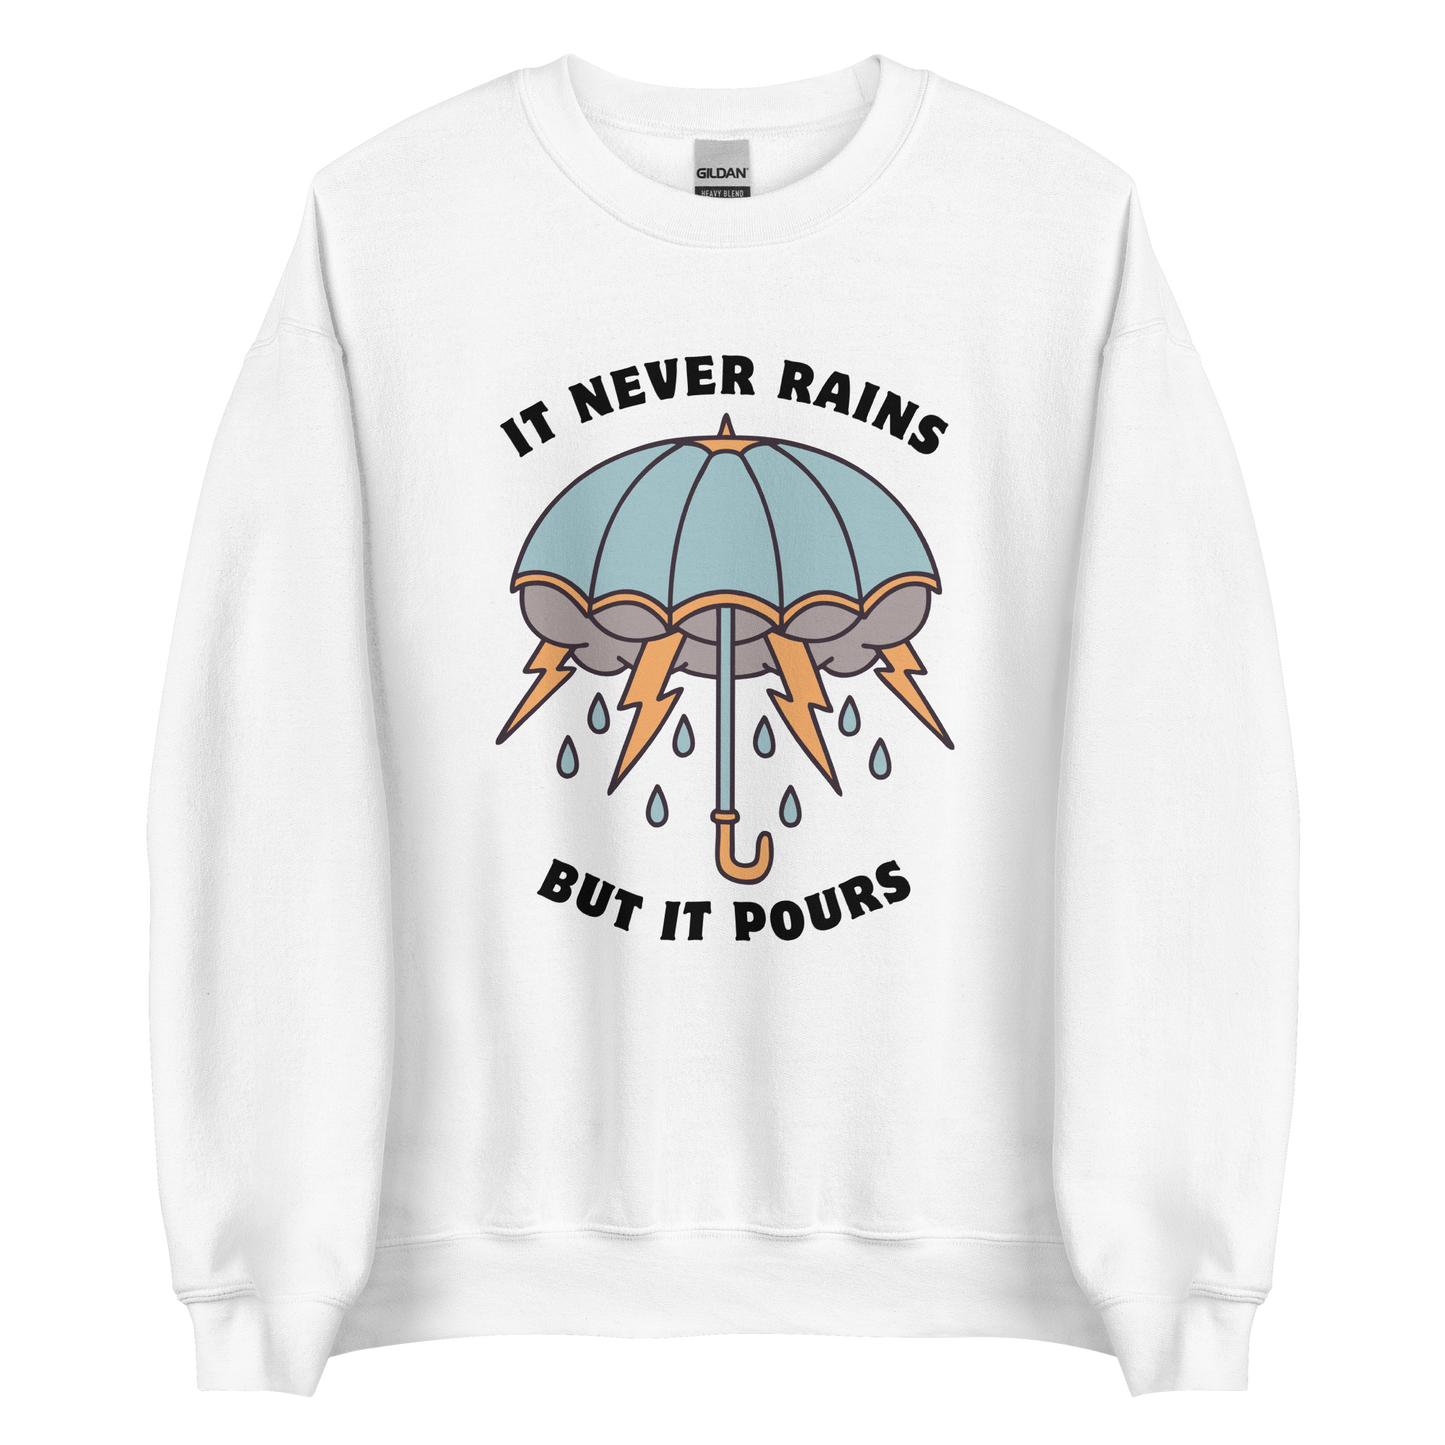 White Umbrella Sweatshirt featuring a unique It Never Rains But It Pours graphic on the chest - Cool Tattoo-Inspired Graphic Umbrella Sweatshirts - Boozy Fox